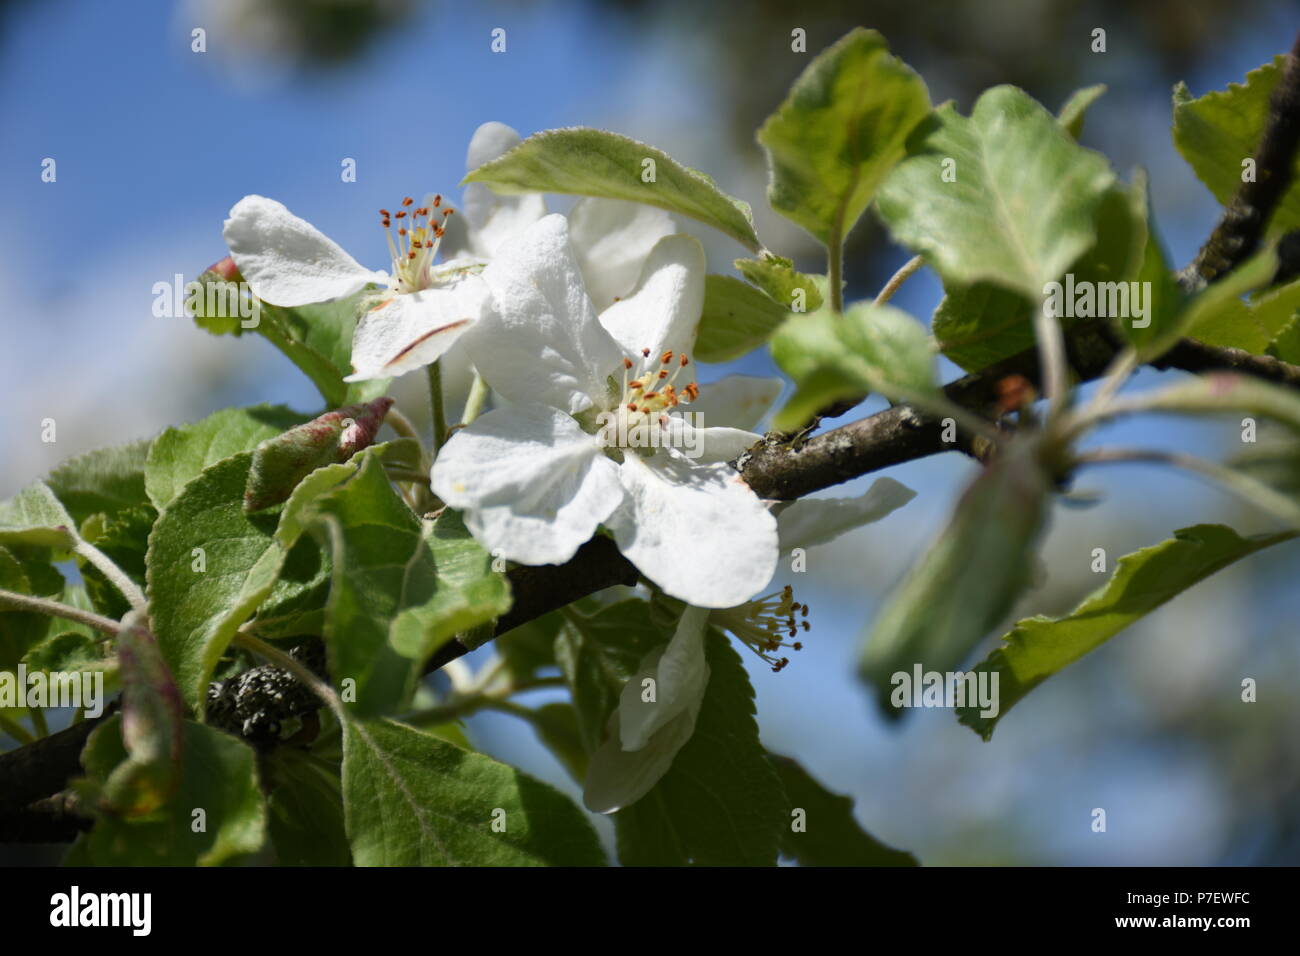 Apfelbaum, Apfel, Baum, Blüte, Blütezeit, Apfelblüte, Apfelblüten, Blüten, Ast, Äste, blühen, Frühling, Samen, Bestäuben, Blatt, Blätter, Bestäuben, A Stock Photo